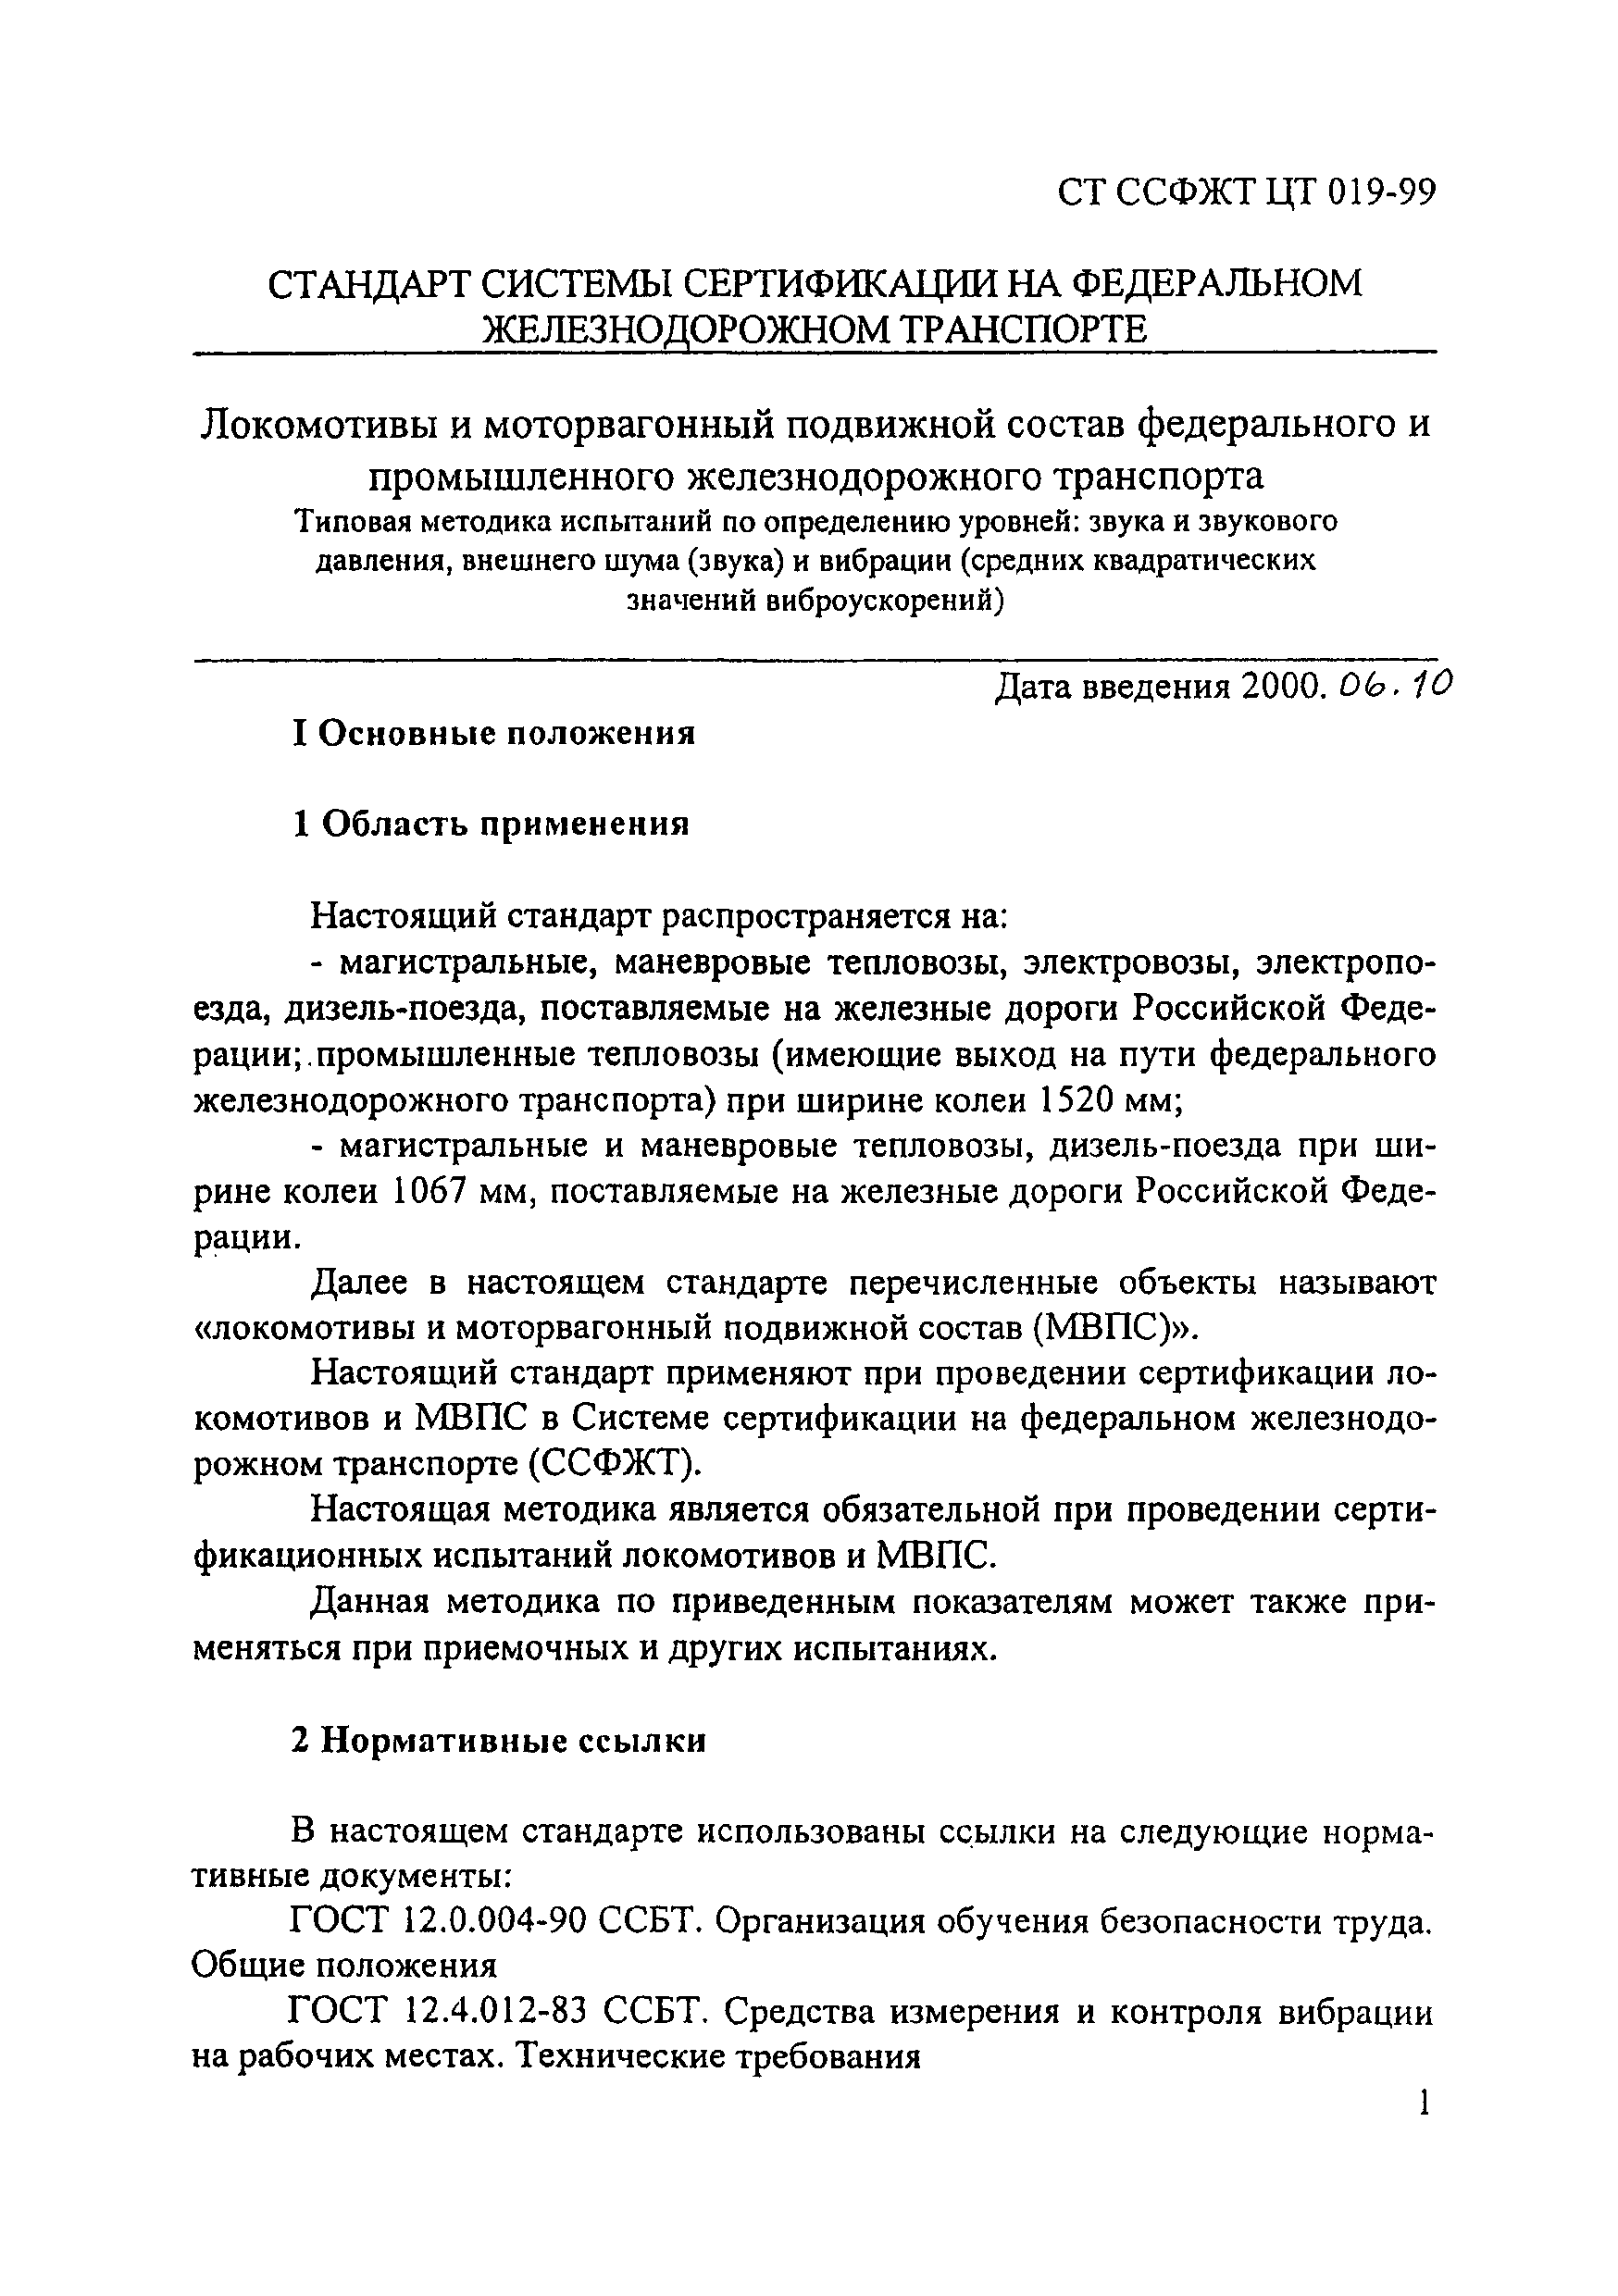 СТ ССФЖТ ЦТ 019-99